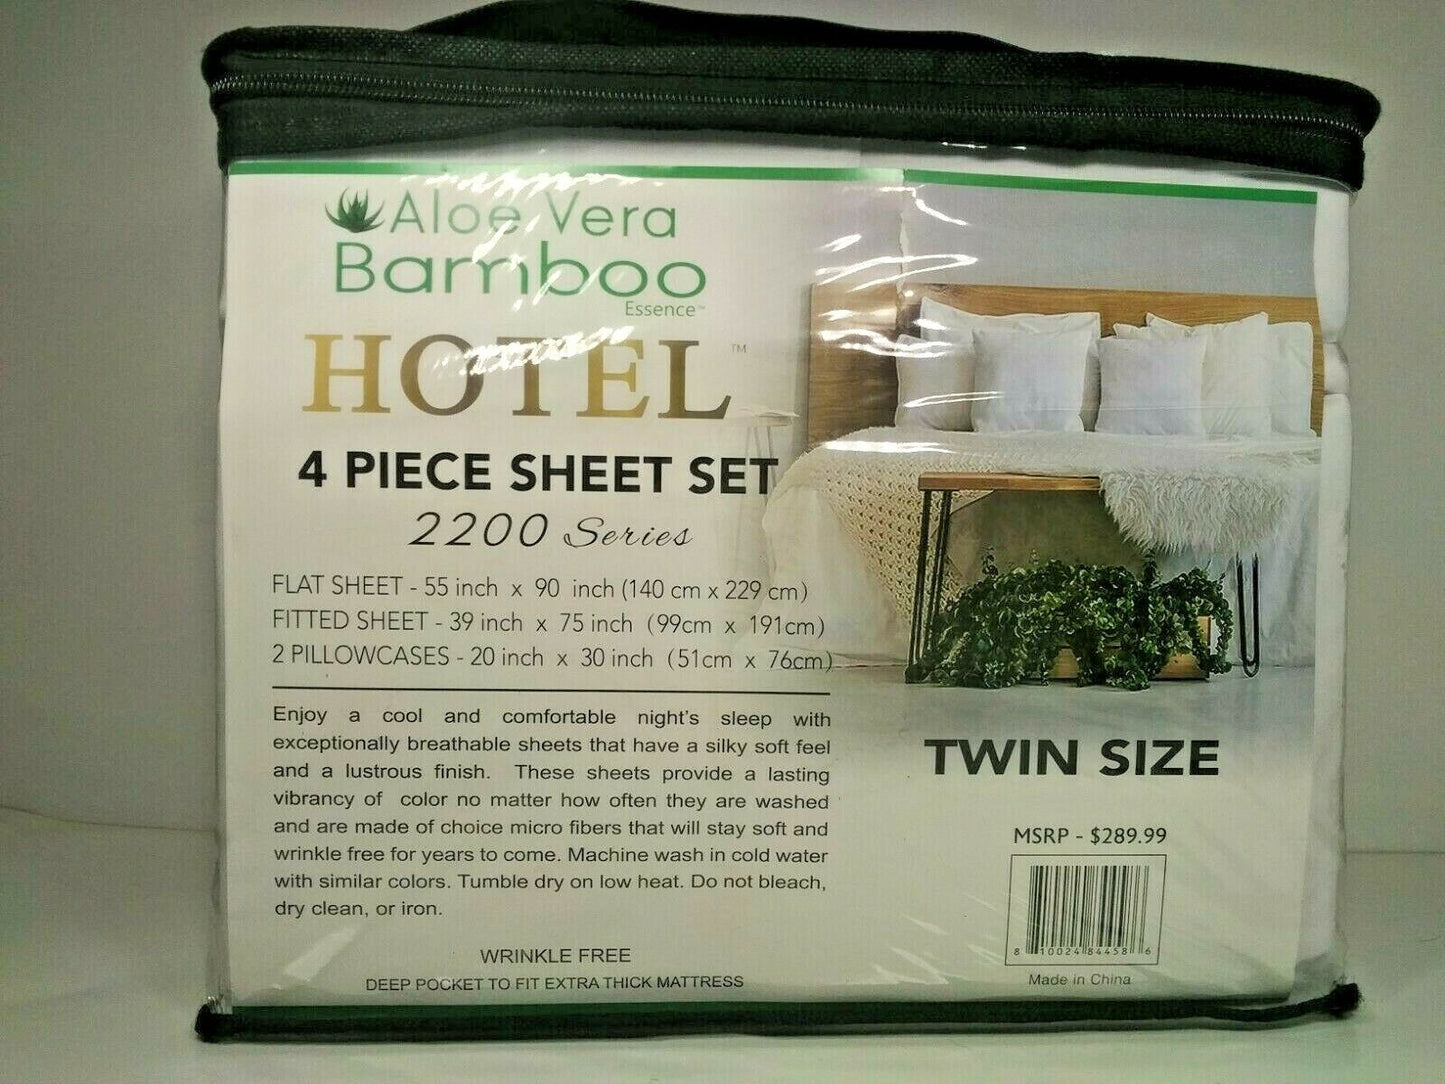 Aloe Vera Bamboo Essence Hotel 2200 Series Twin Size 4 piece Set - White